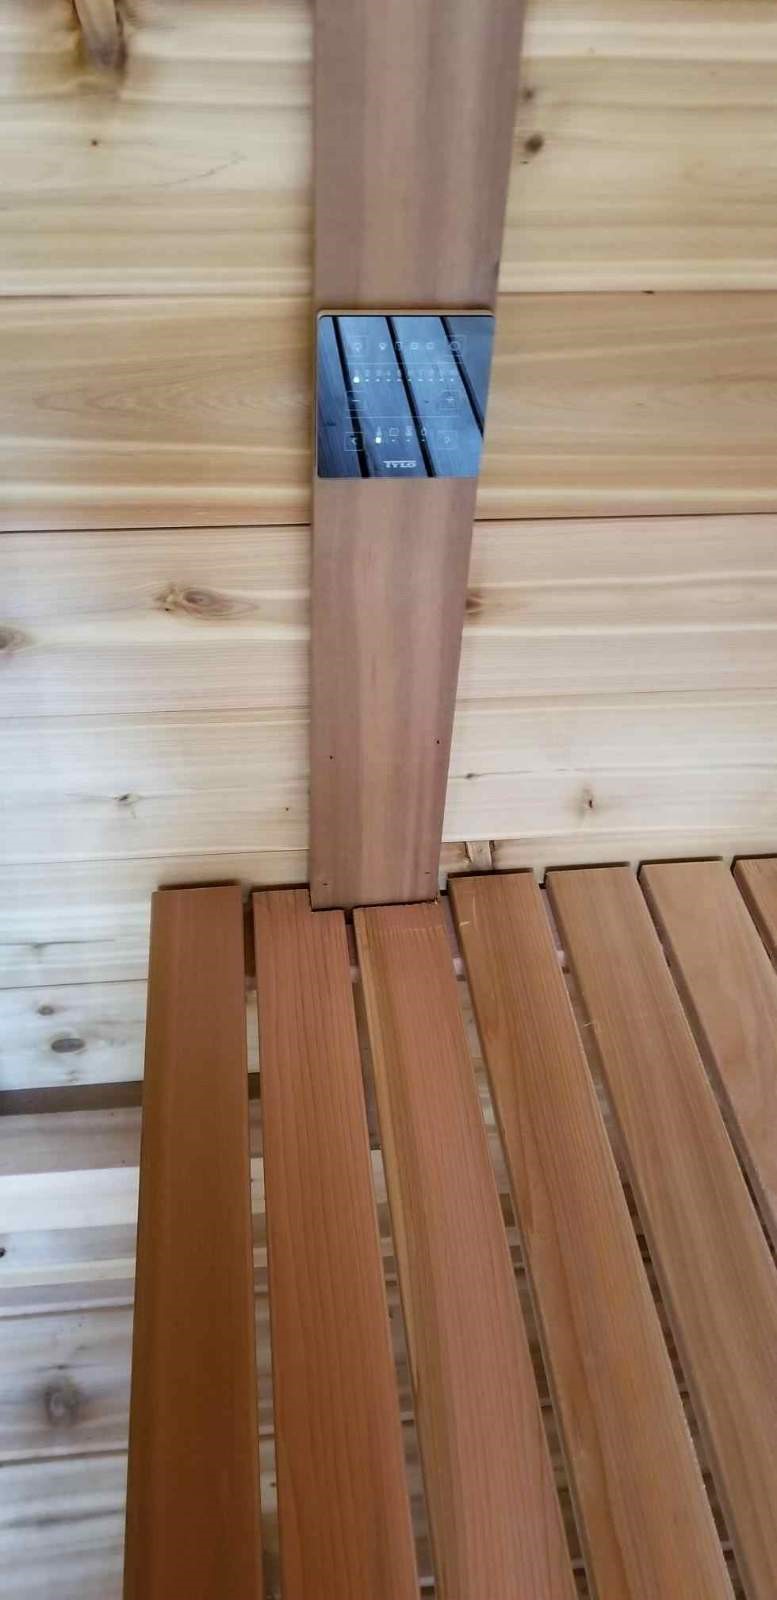 tylo sauna with control